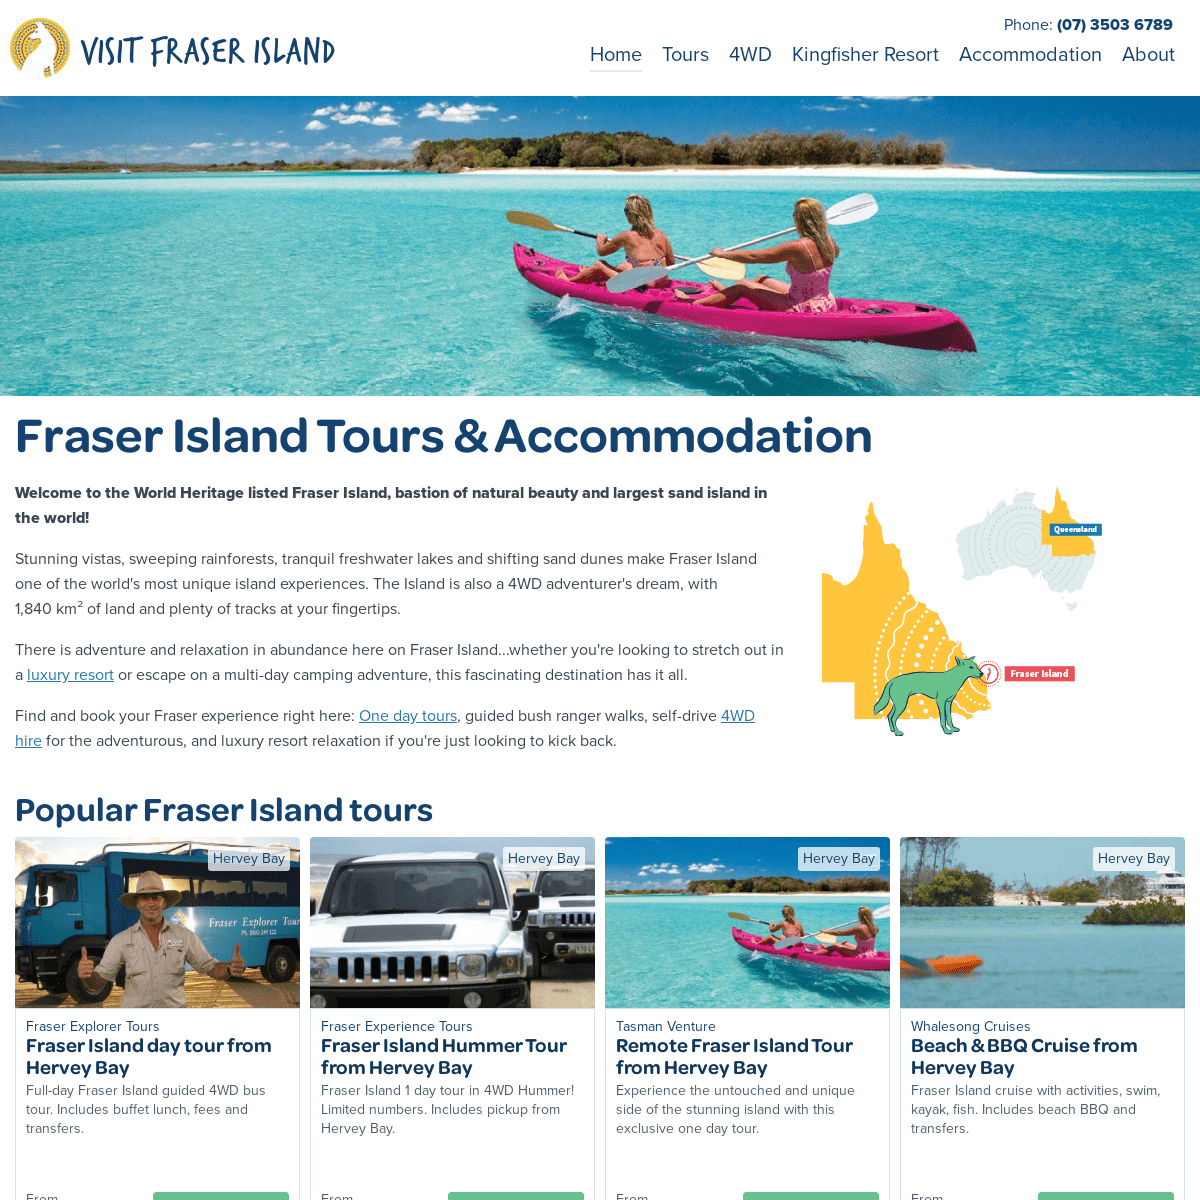 Fraser Island Tours & Accommodation | Visit Fraser Island